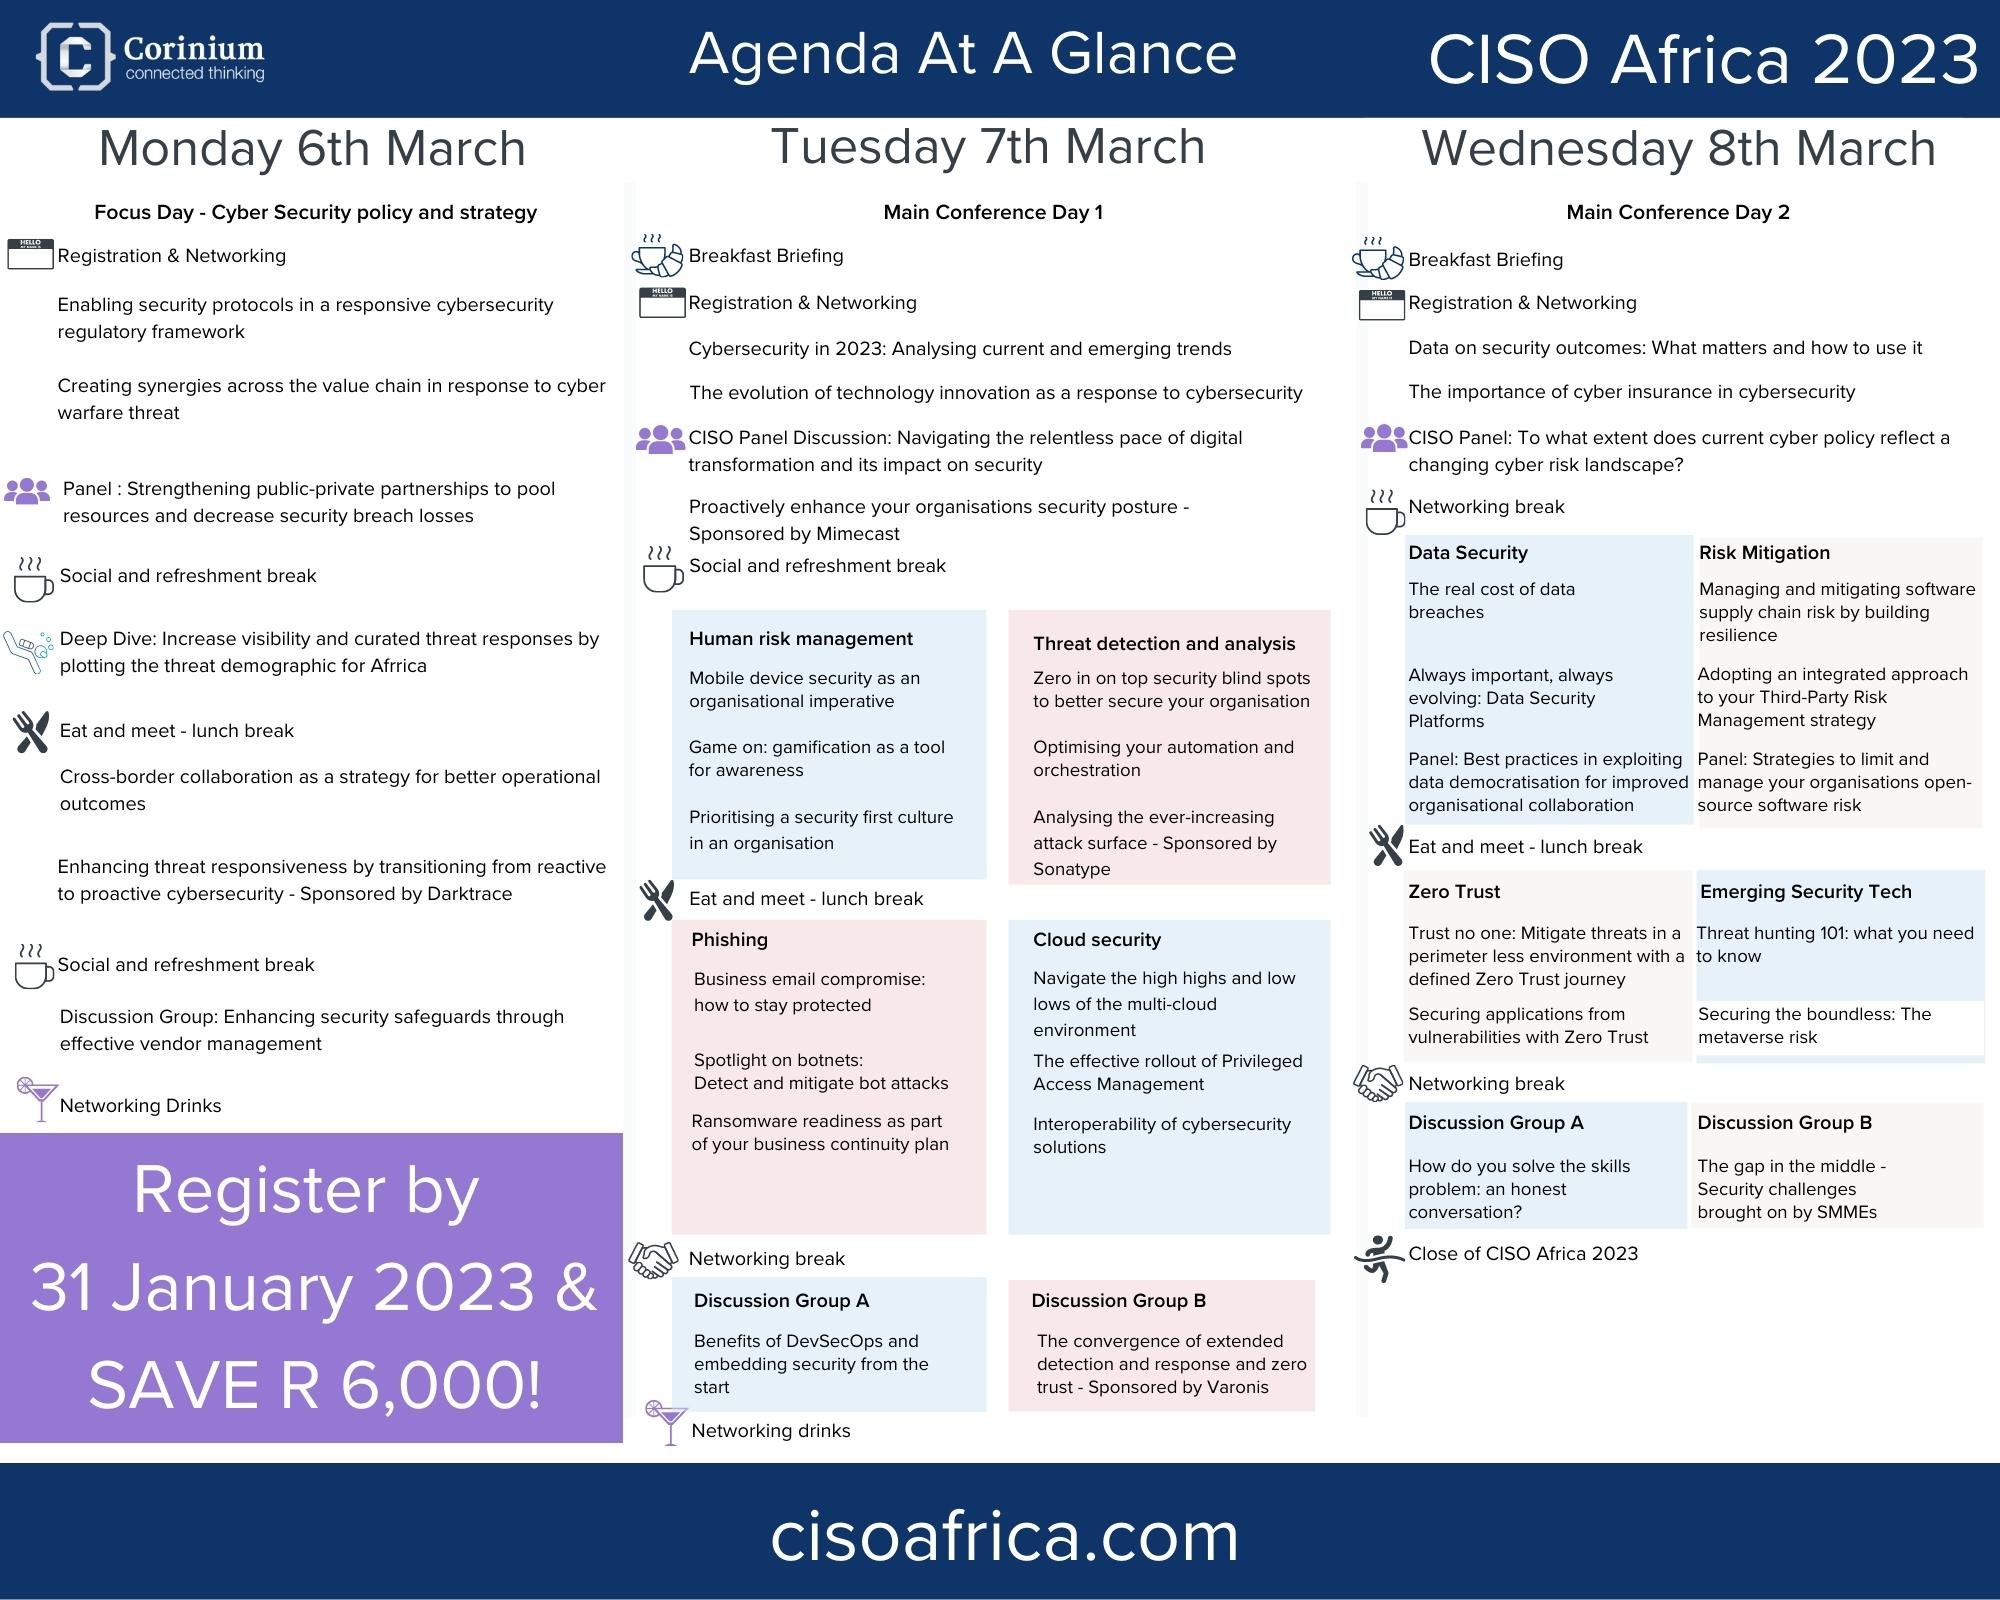 CISO Africa 2023 AAAG 2000 x 1200 (4)